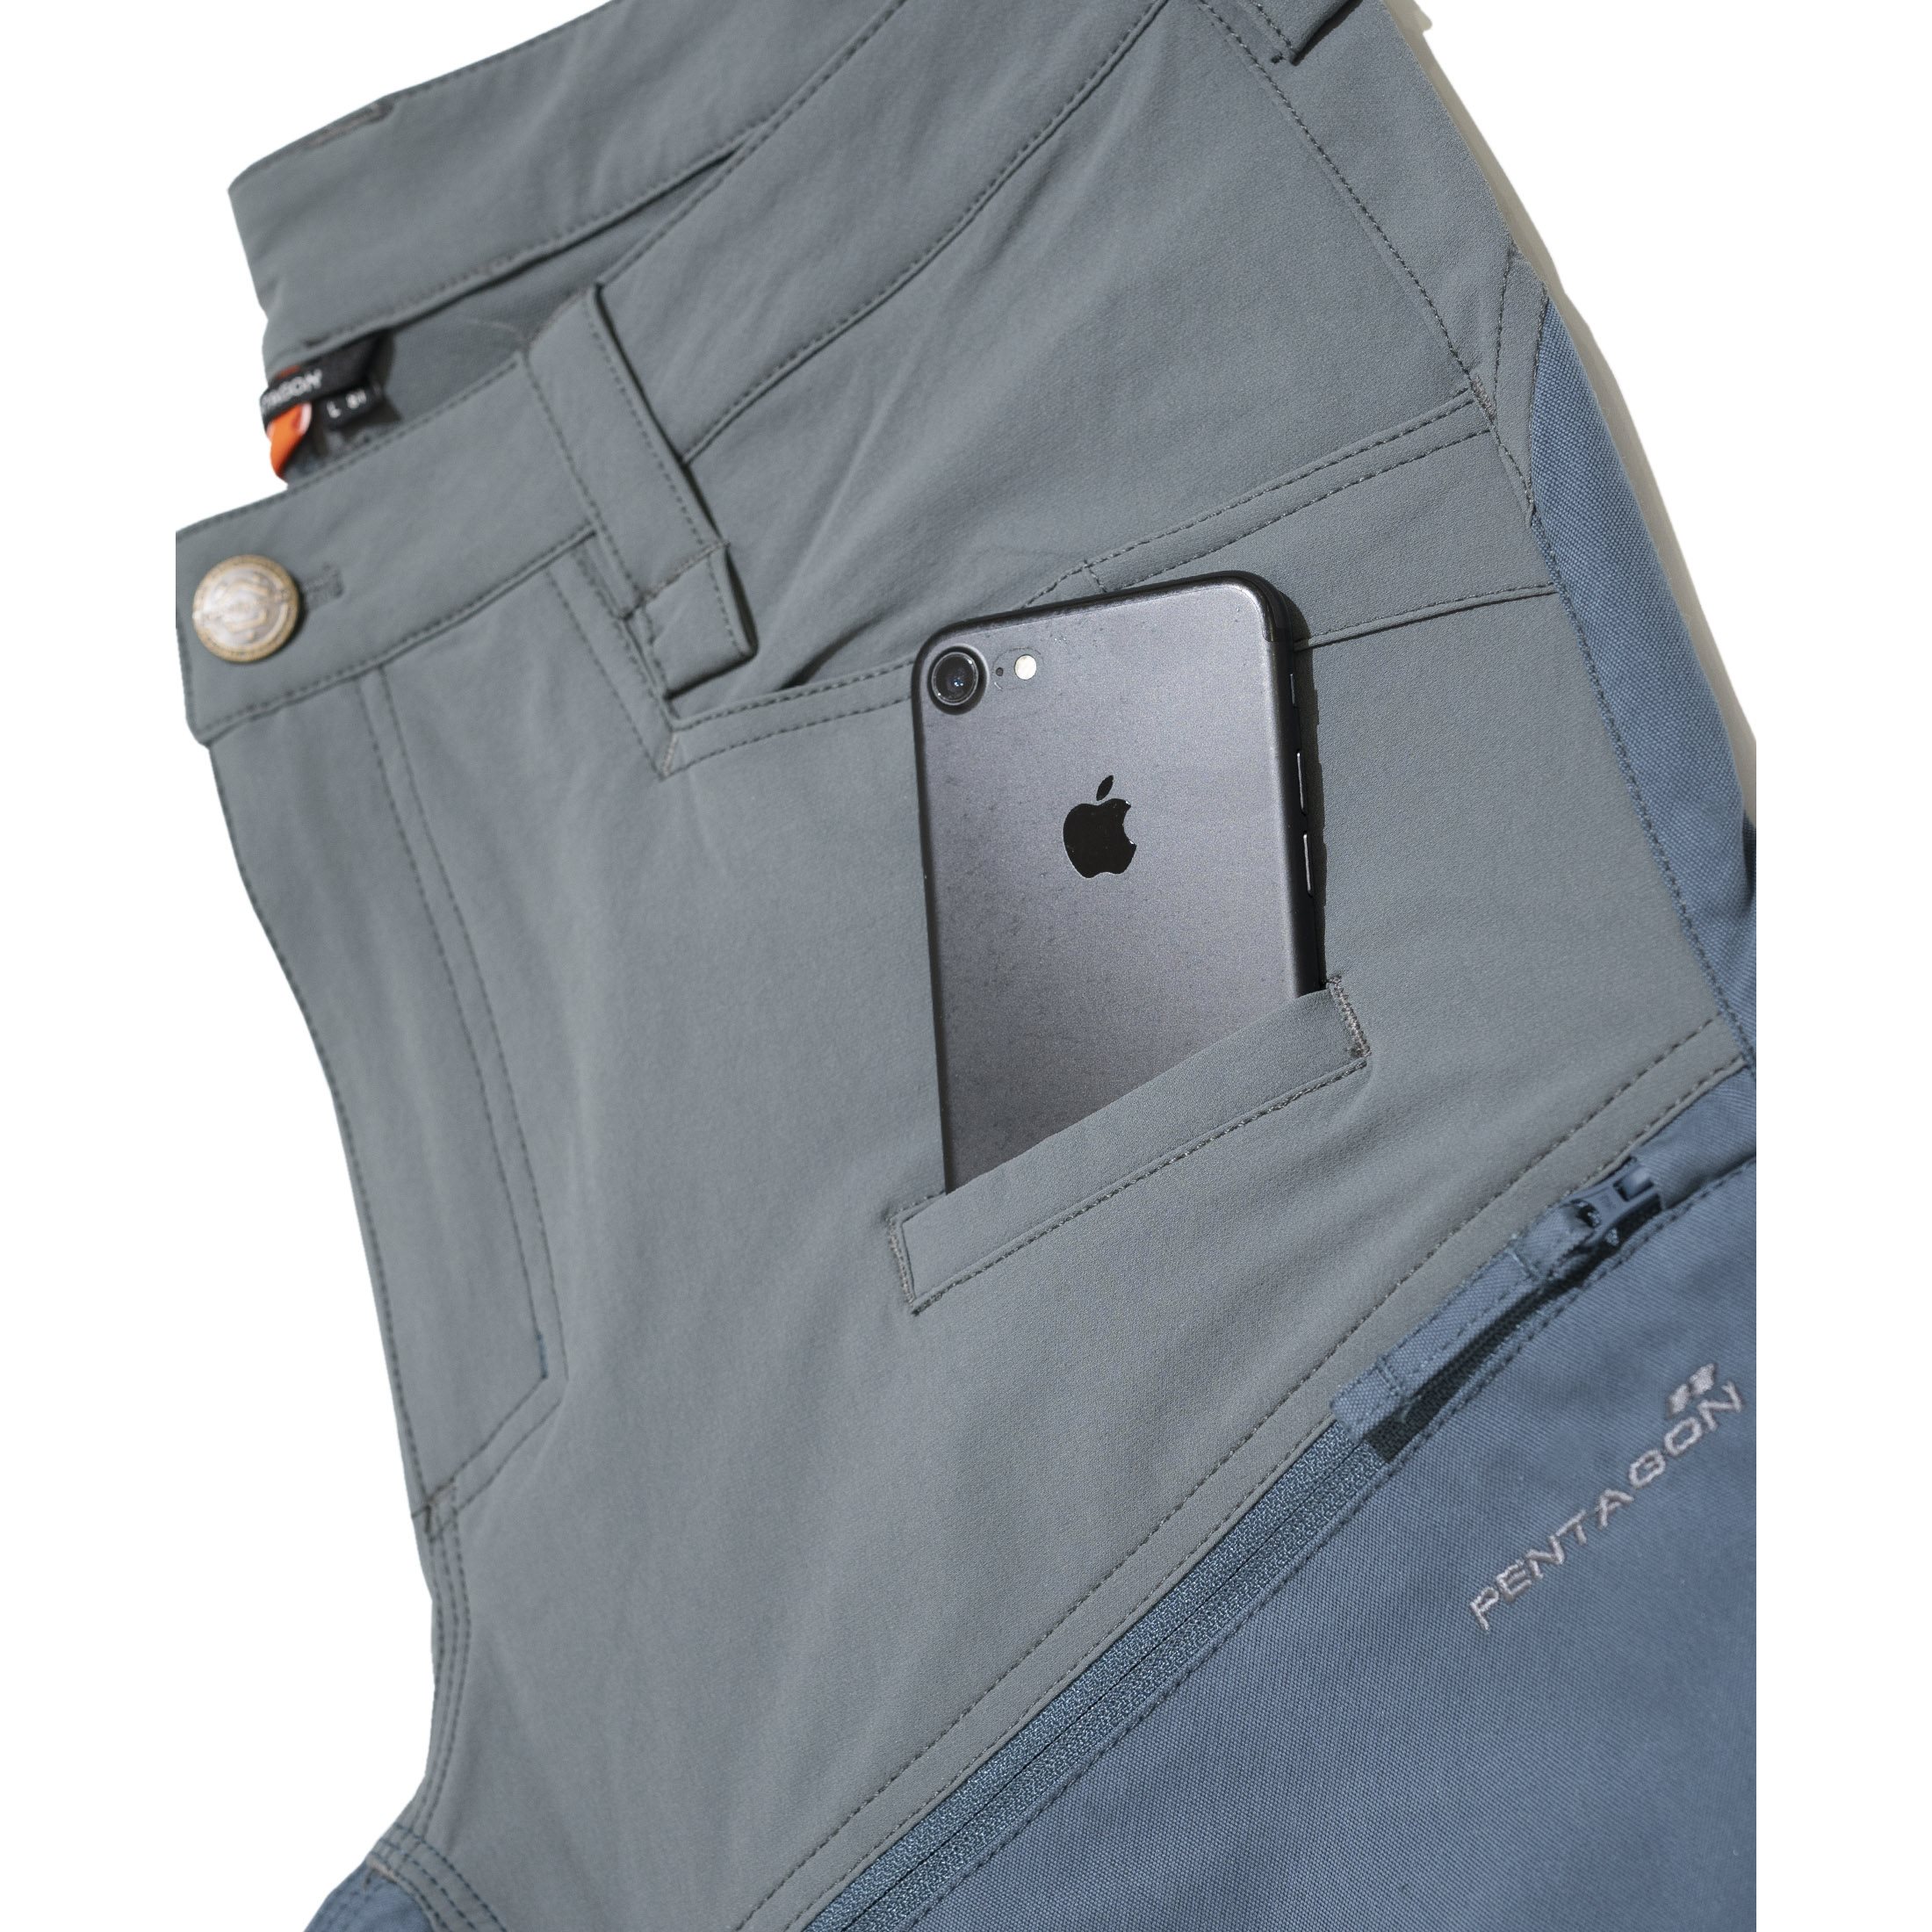 Pants RENEGADE SAVANNA CHARCOAL BLUE PENTAGON K05045-76 L-11